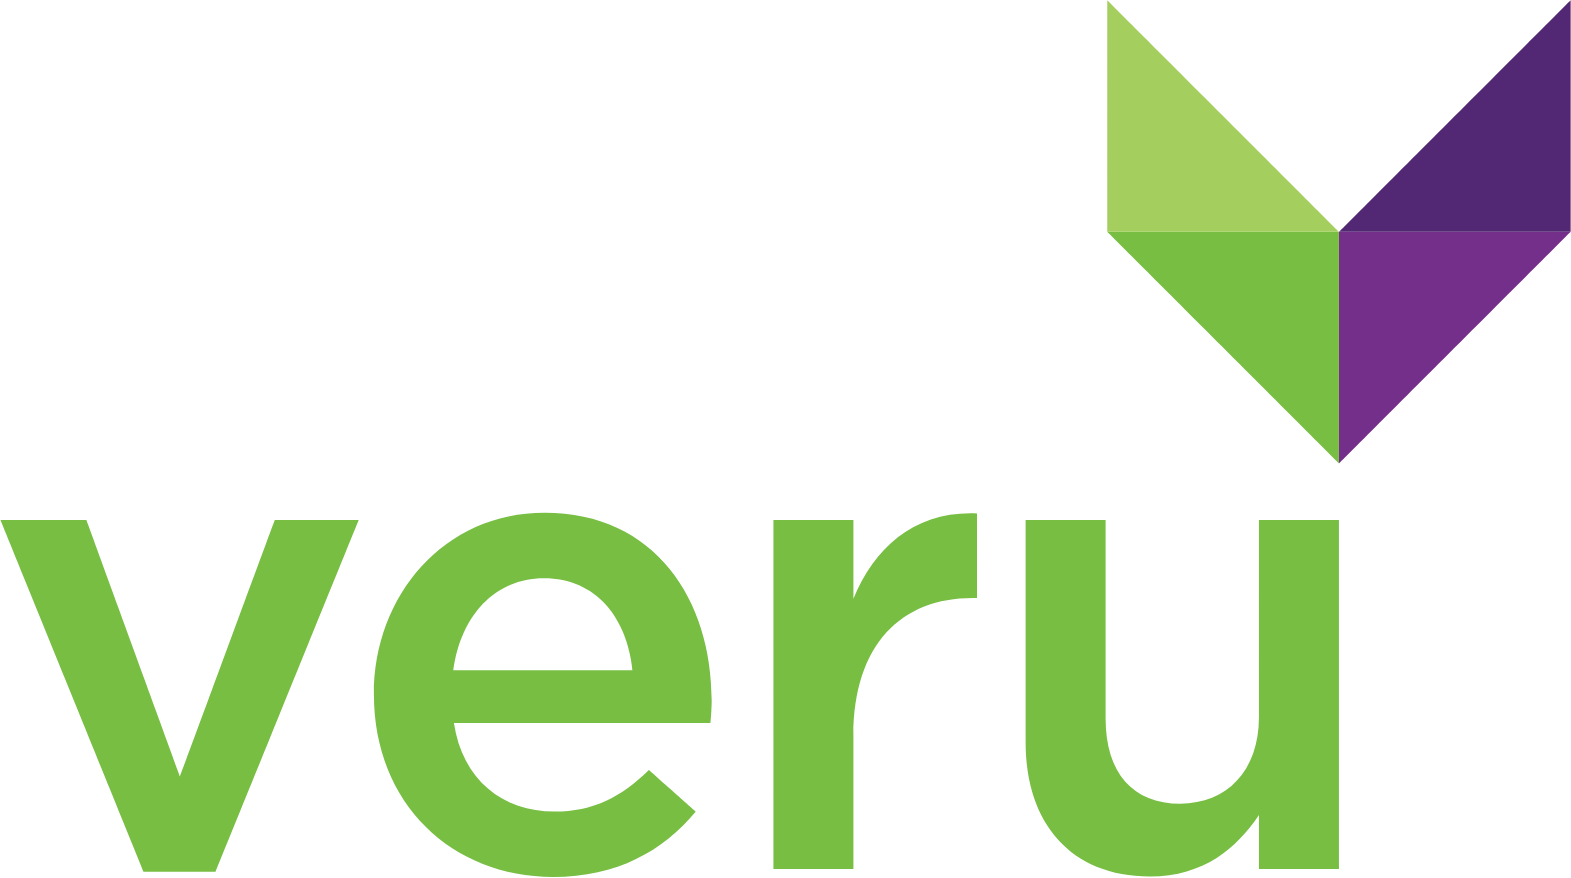 Veru logo large (transparent PNG)